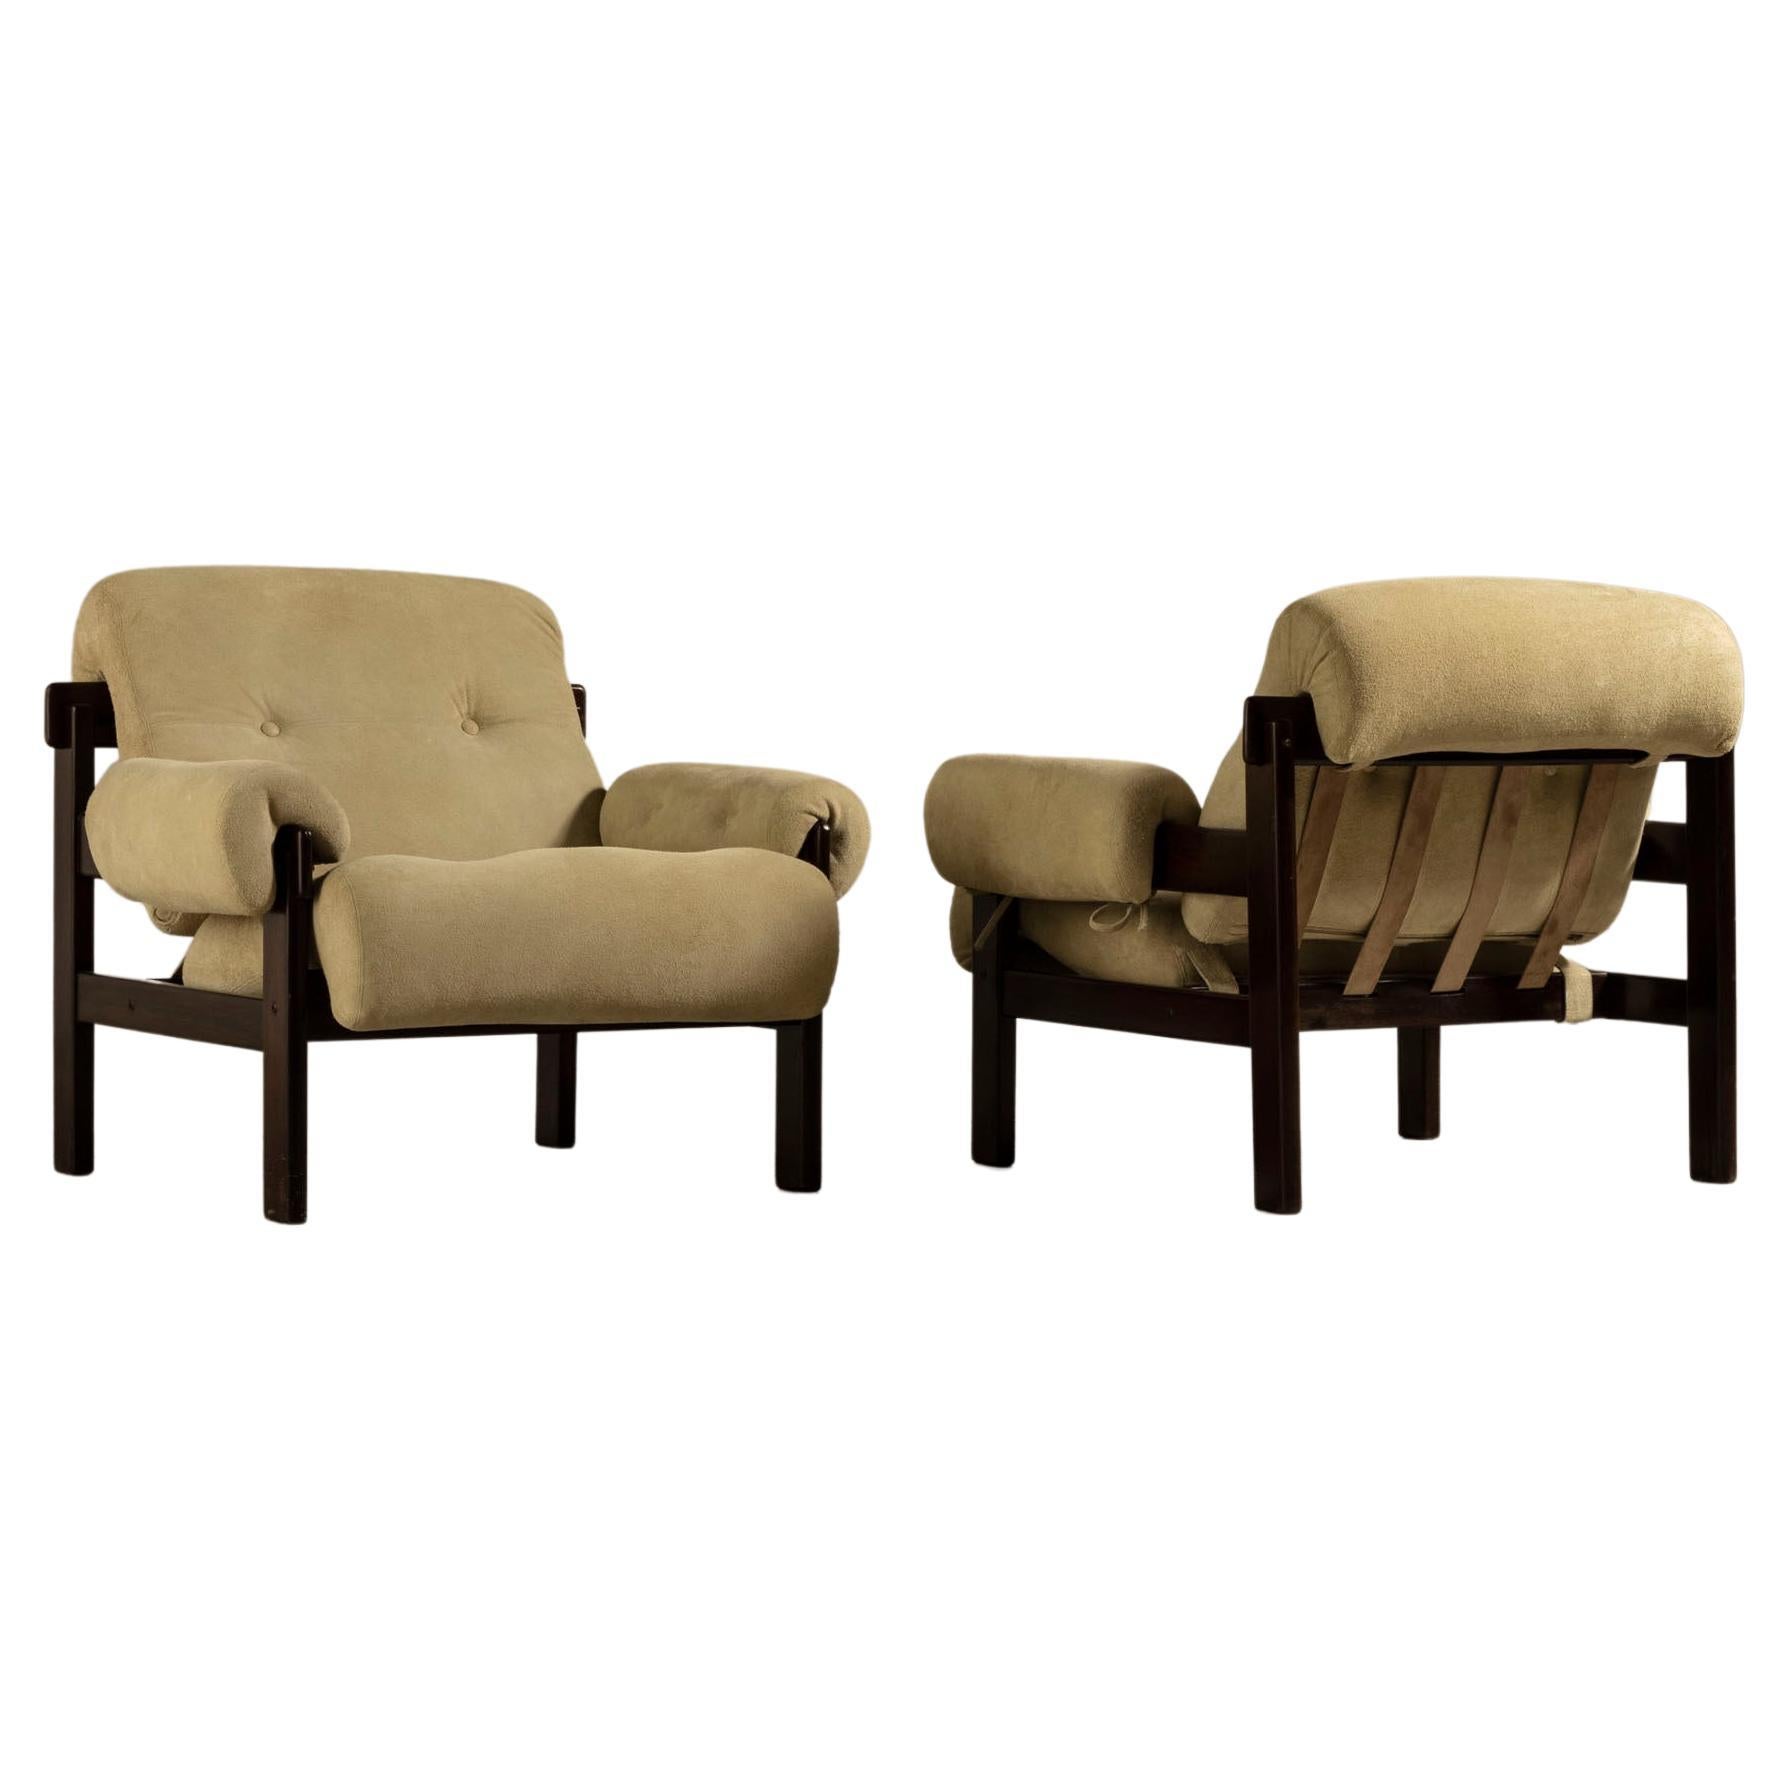 Copa Lounge Chair, by Jean Gillon, Brazilian Midcentury Modern Design